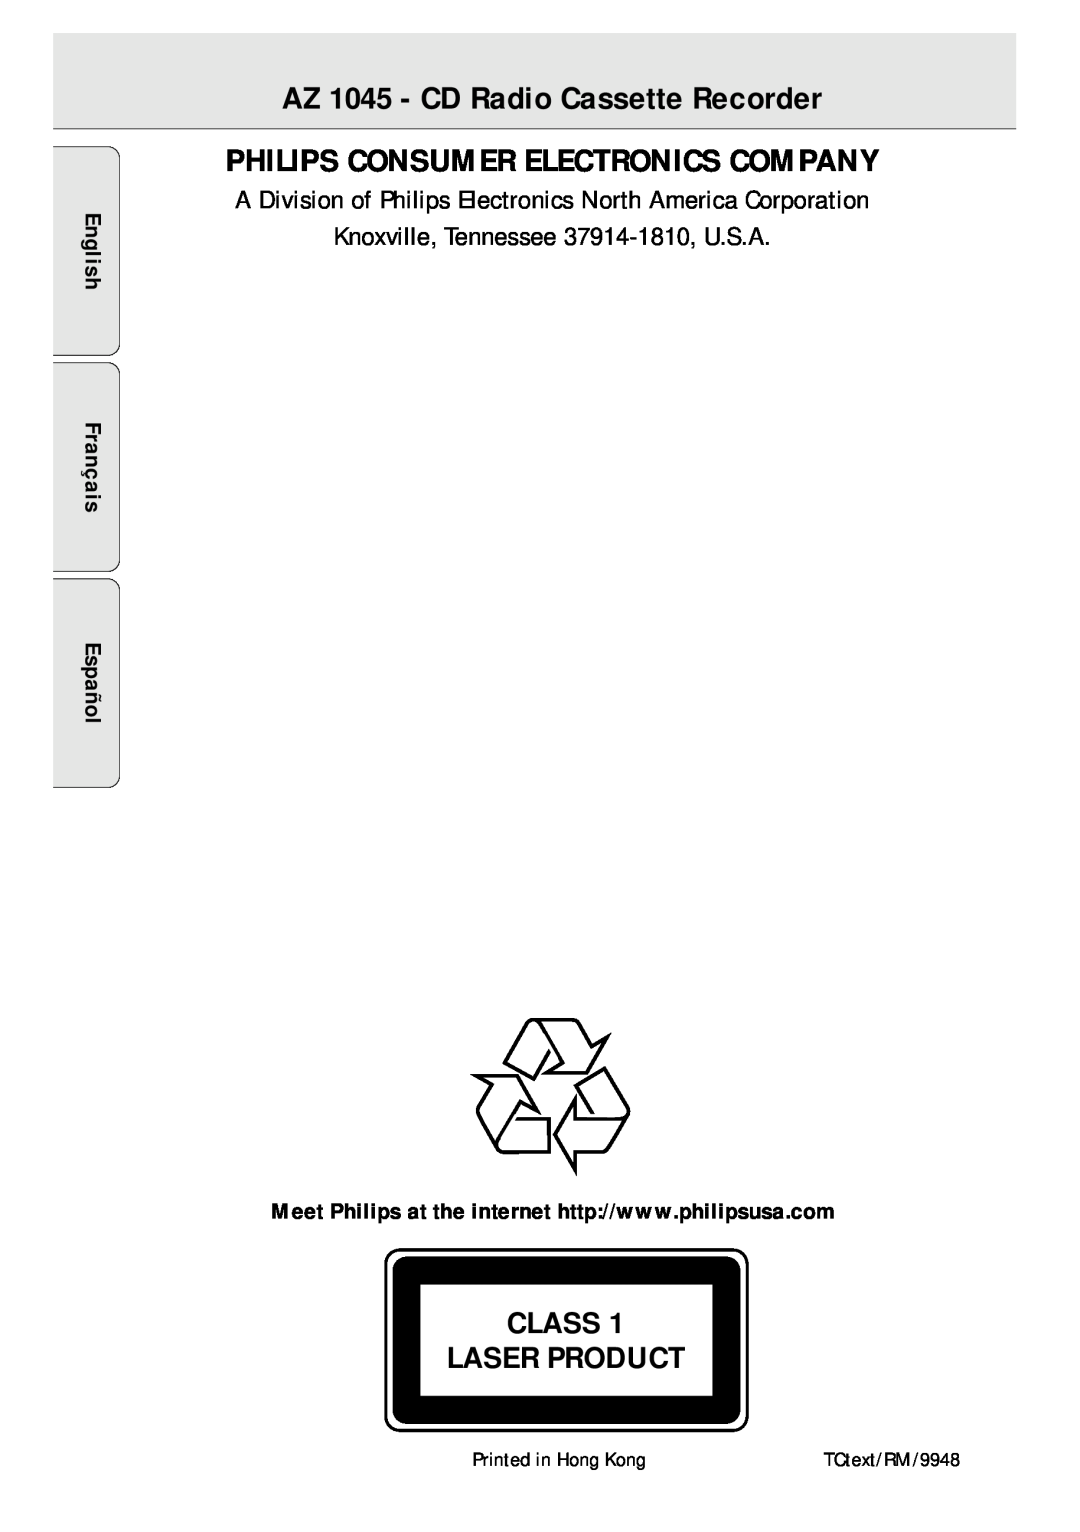 Magnavox manual AZ 1045 - CD Radio Cassette Recorder, Philips Consumer Electronics Company, Class Laser Product 